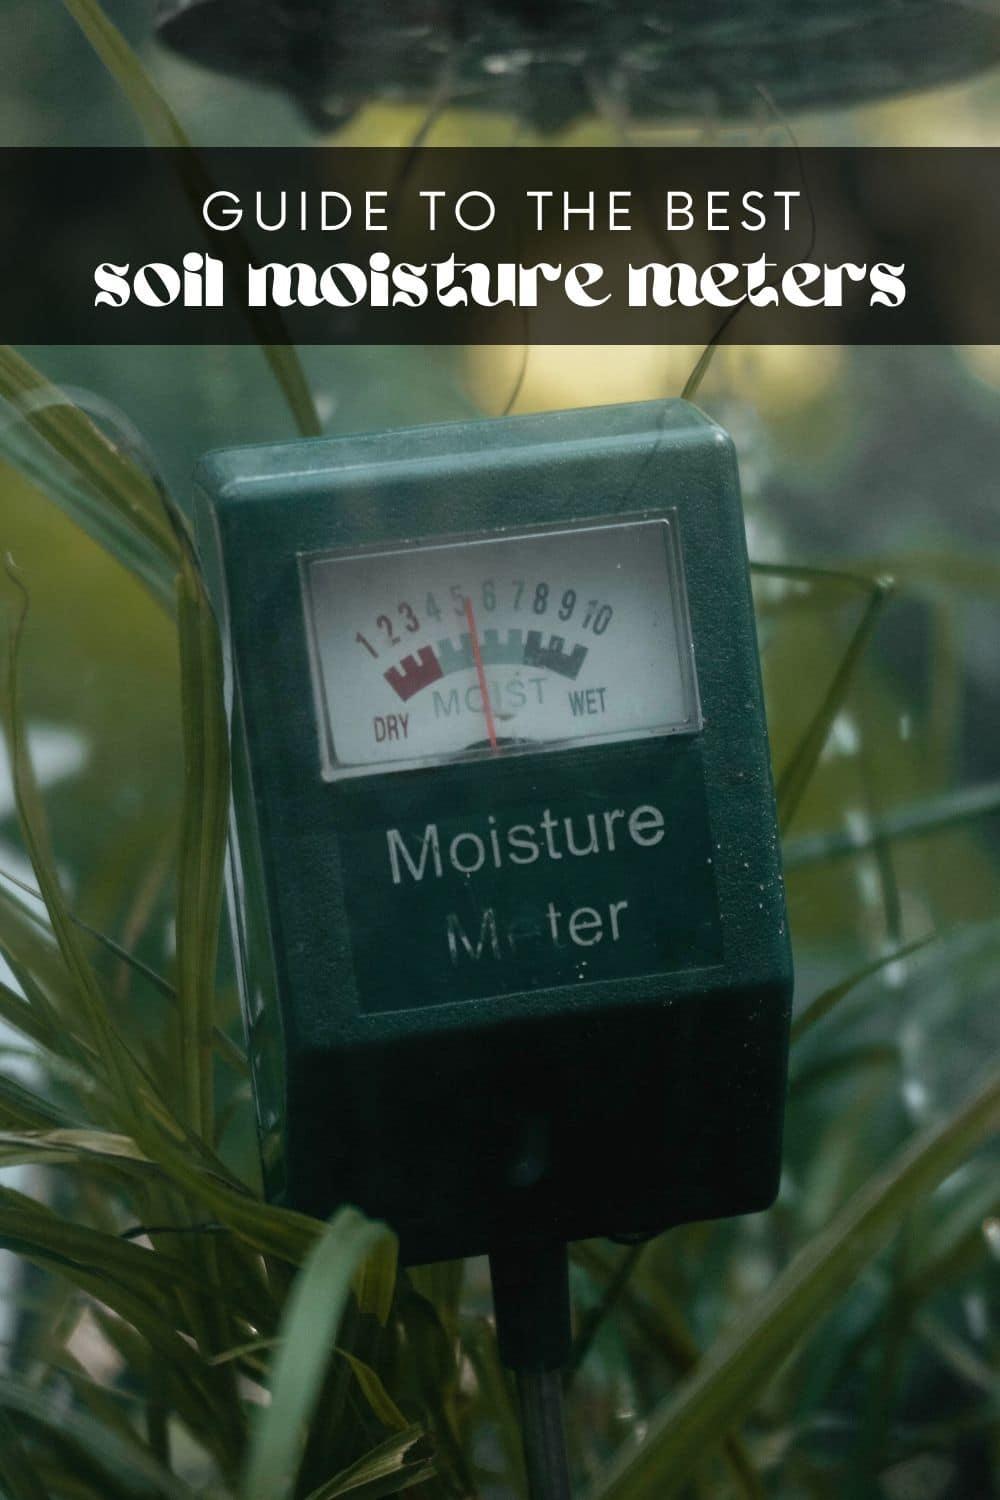 Plant Moisture Meter